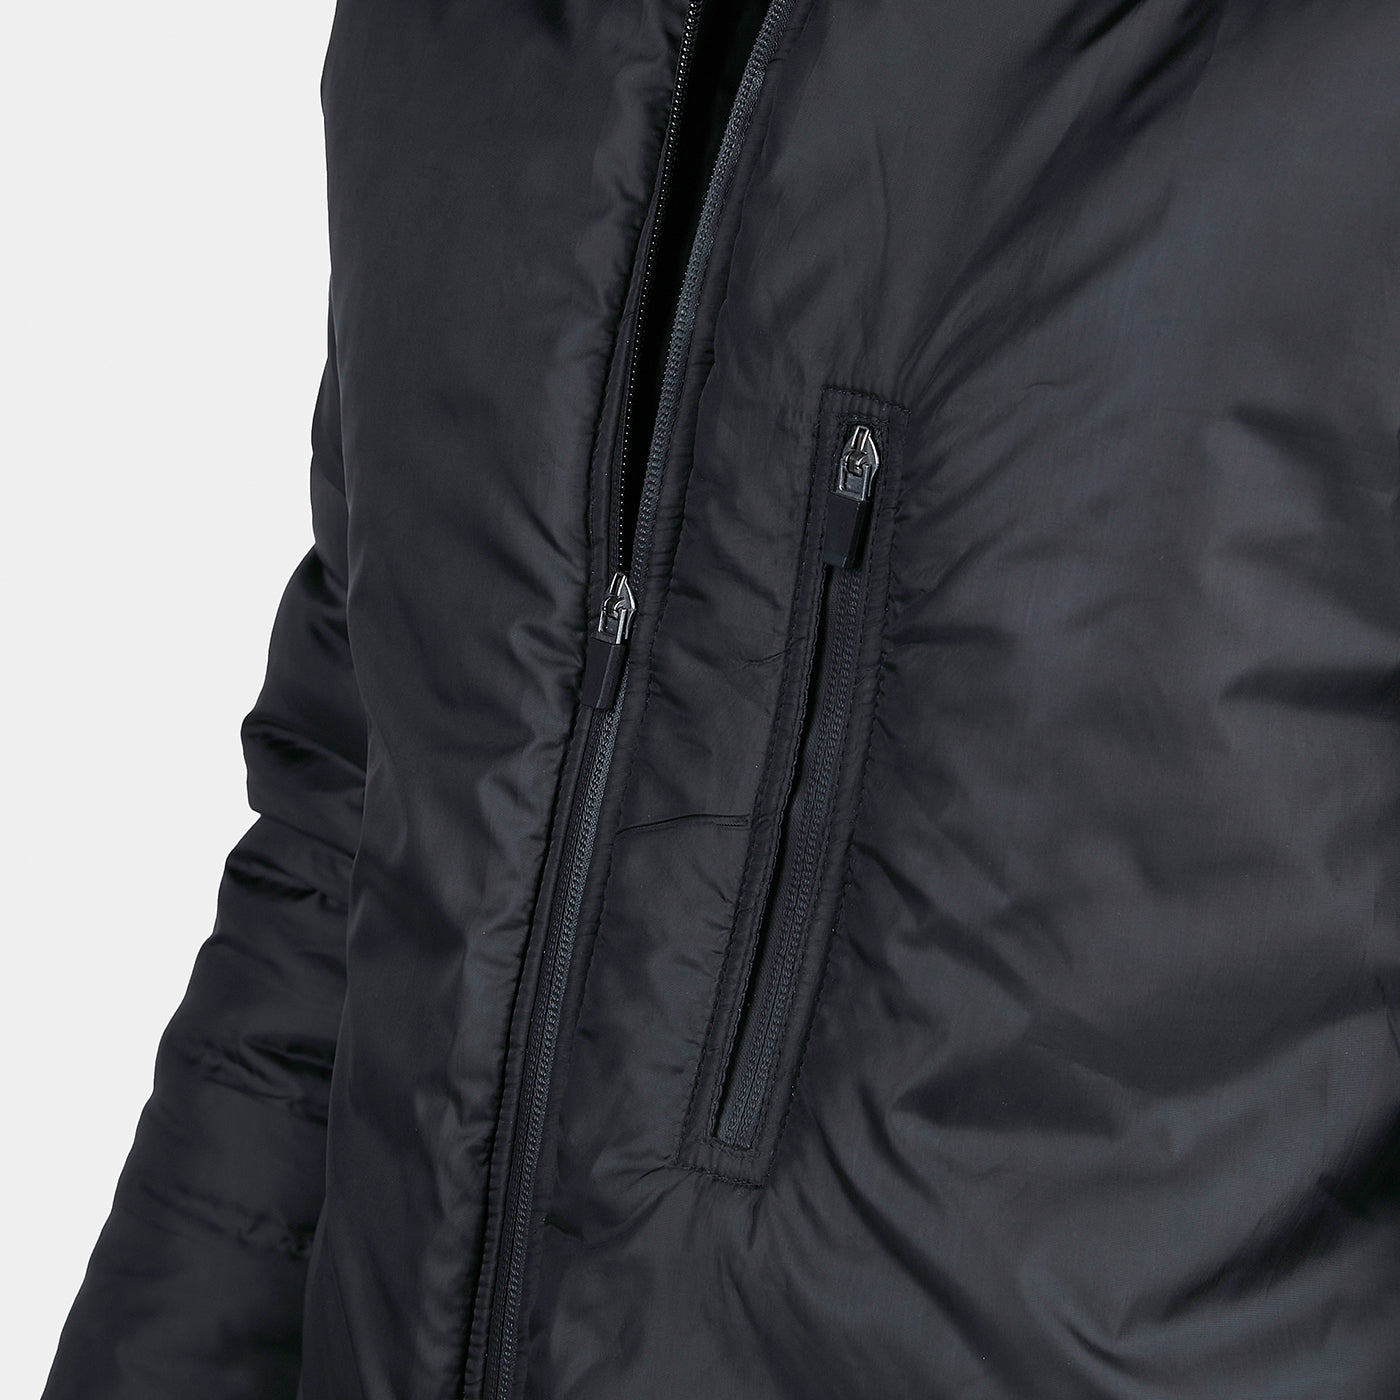 Buy BLACK Zipper Bomber Jacket – Ndure.com